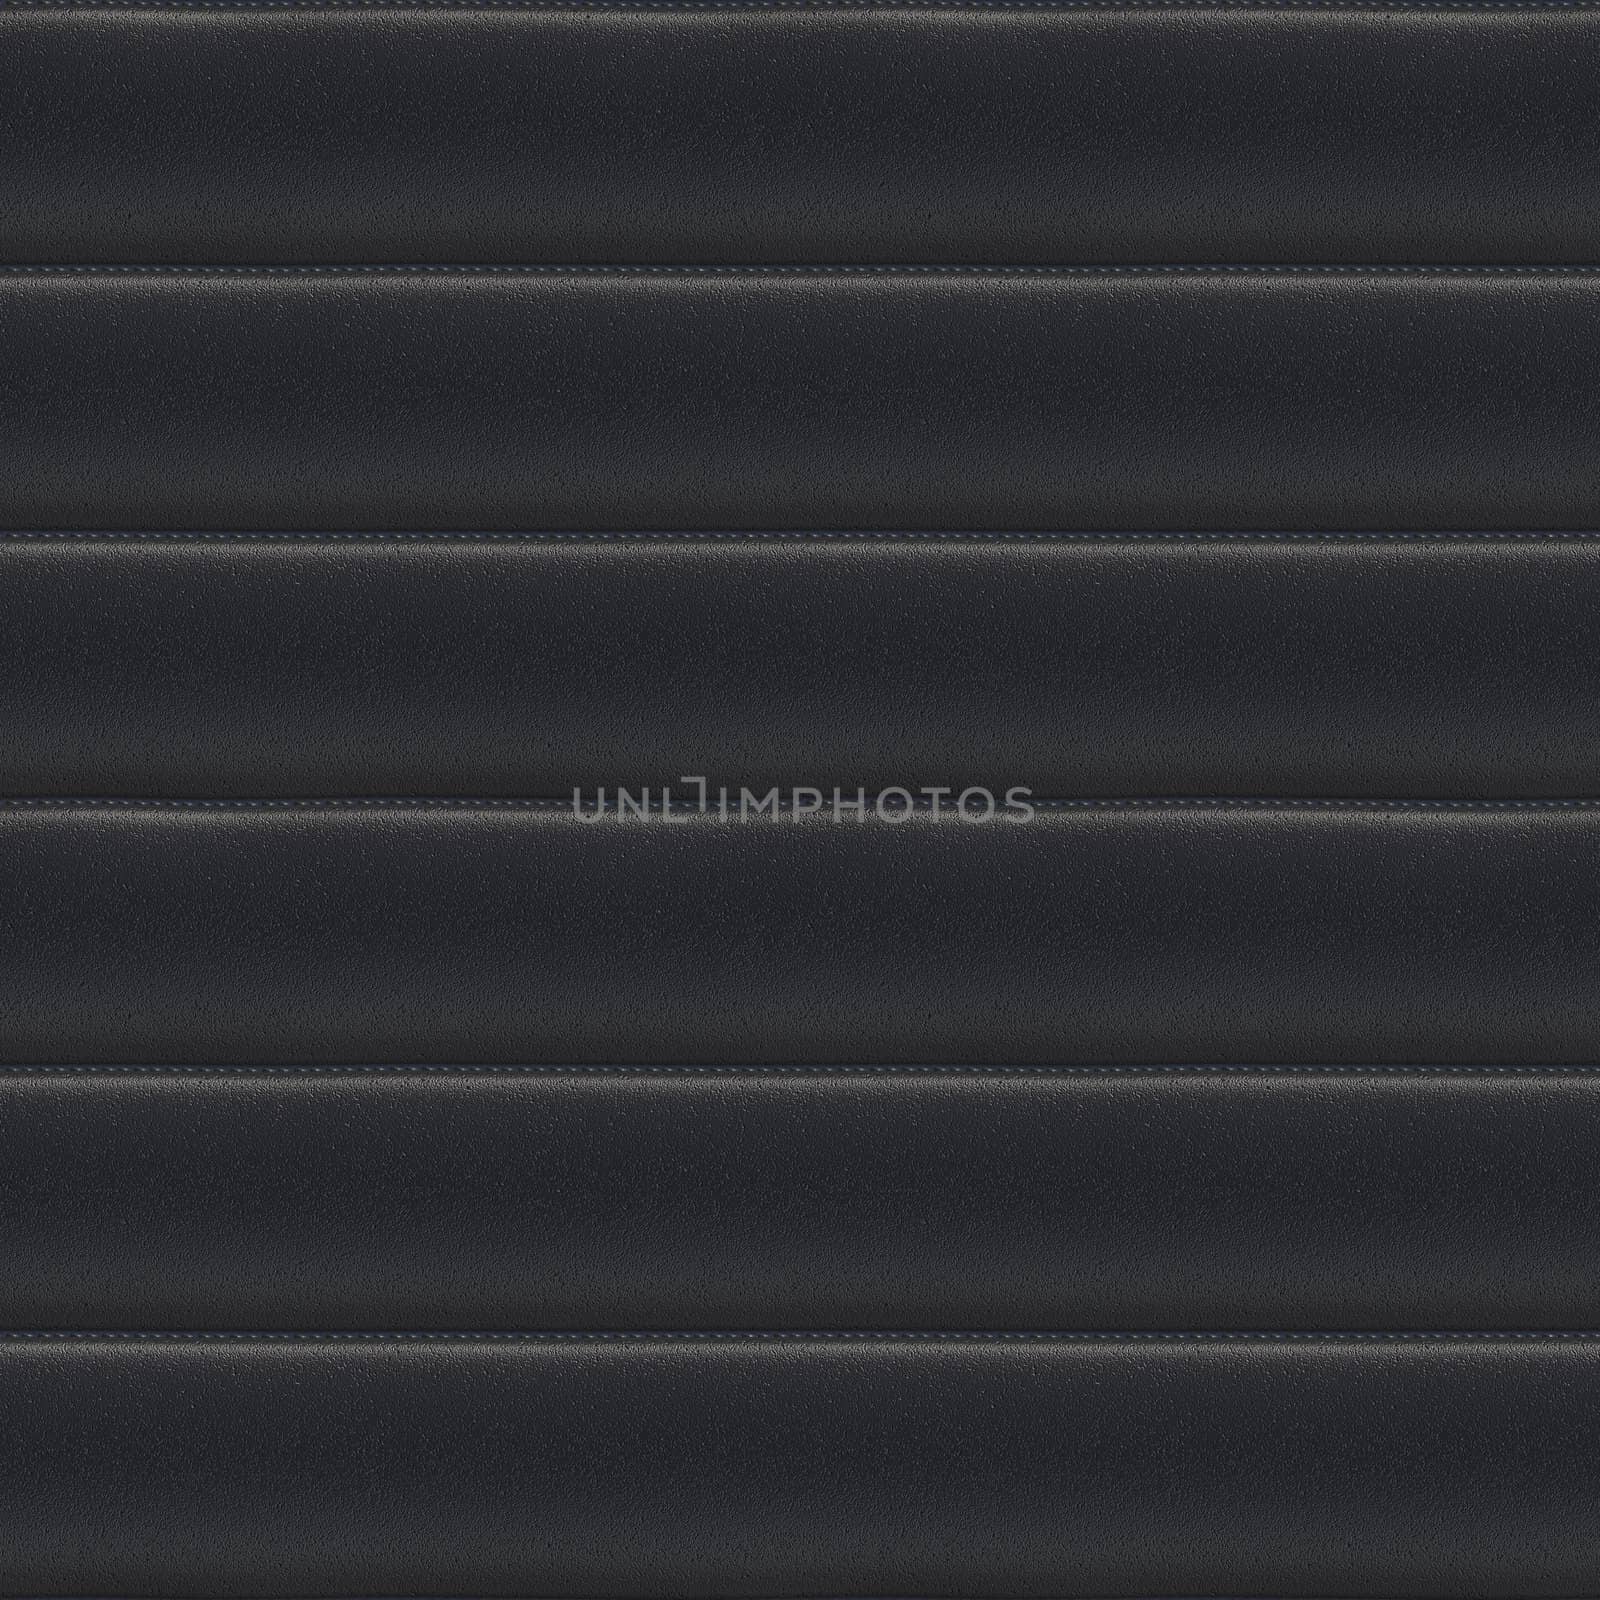 Black Upholstery Leather Seamless Pattern - Hyper Realistic Illustration